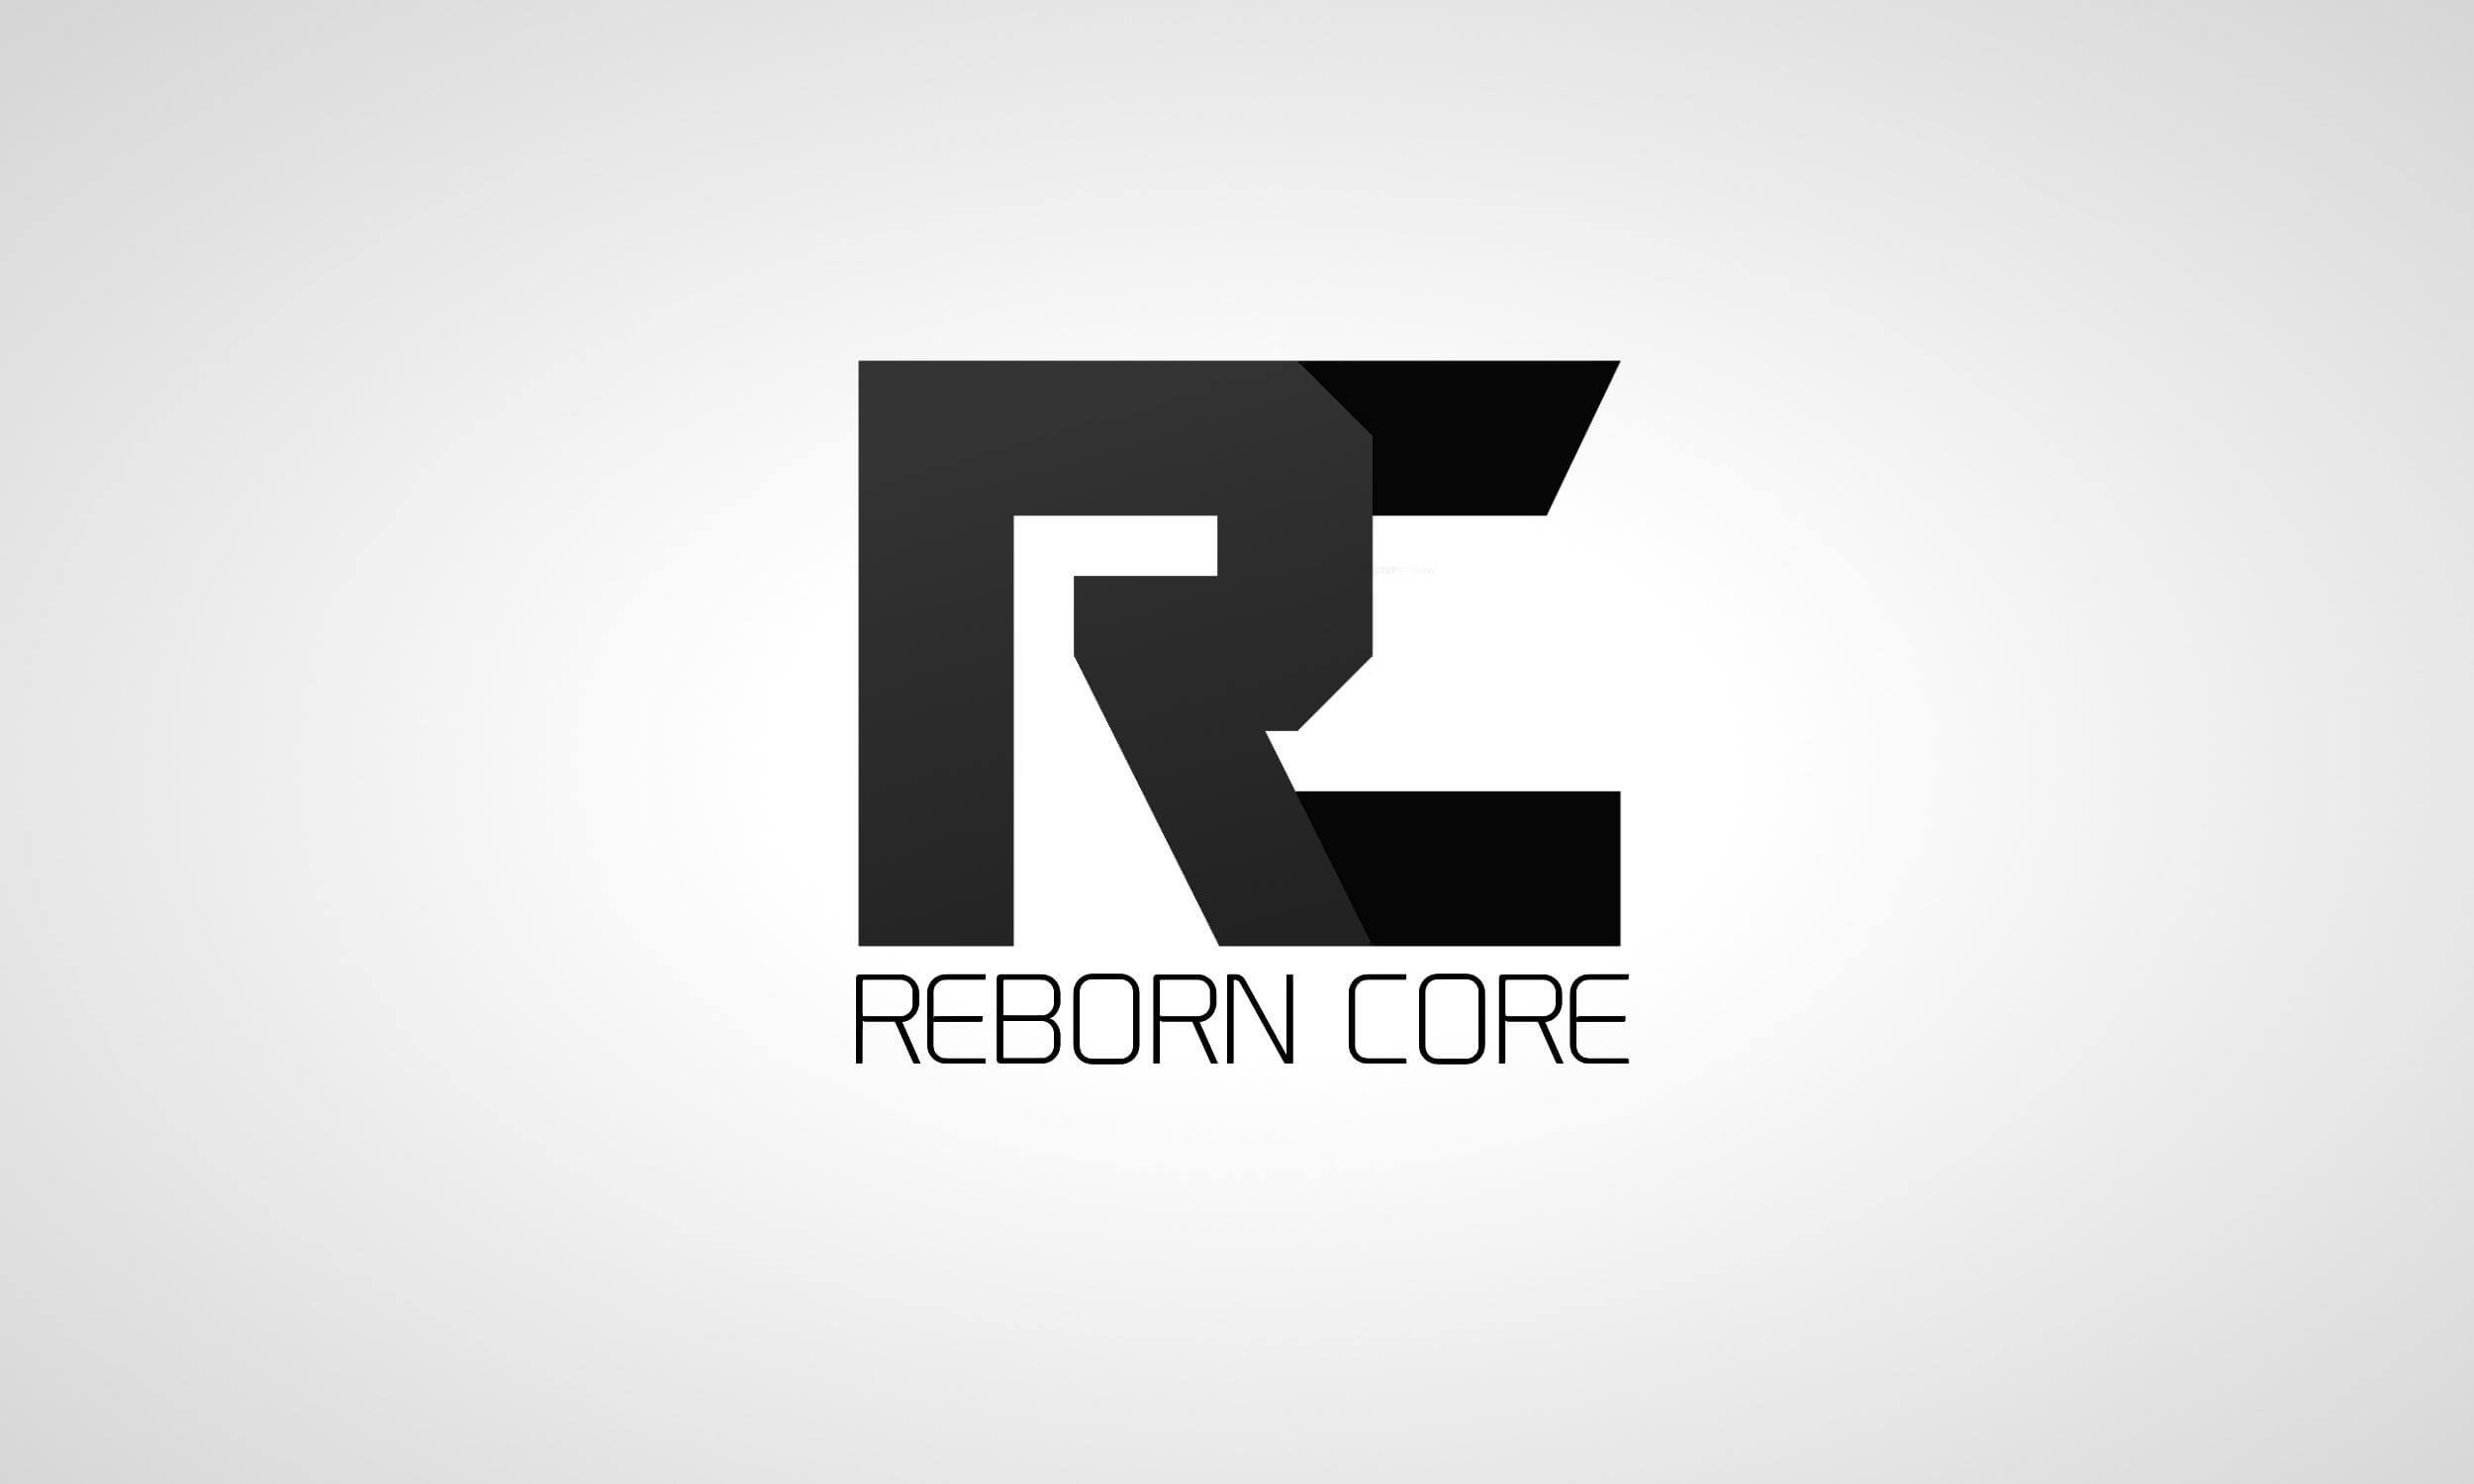 Reborn Core скриншот 1